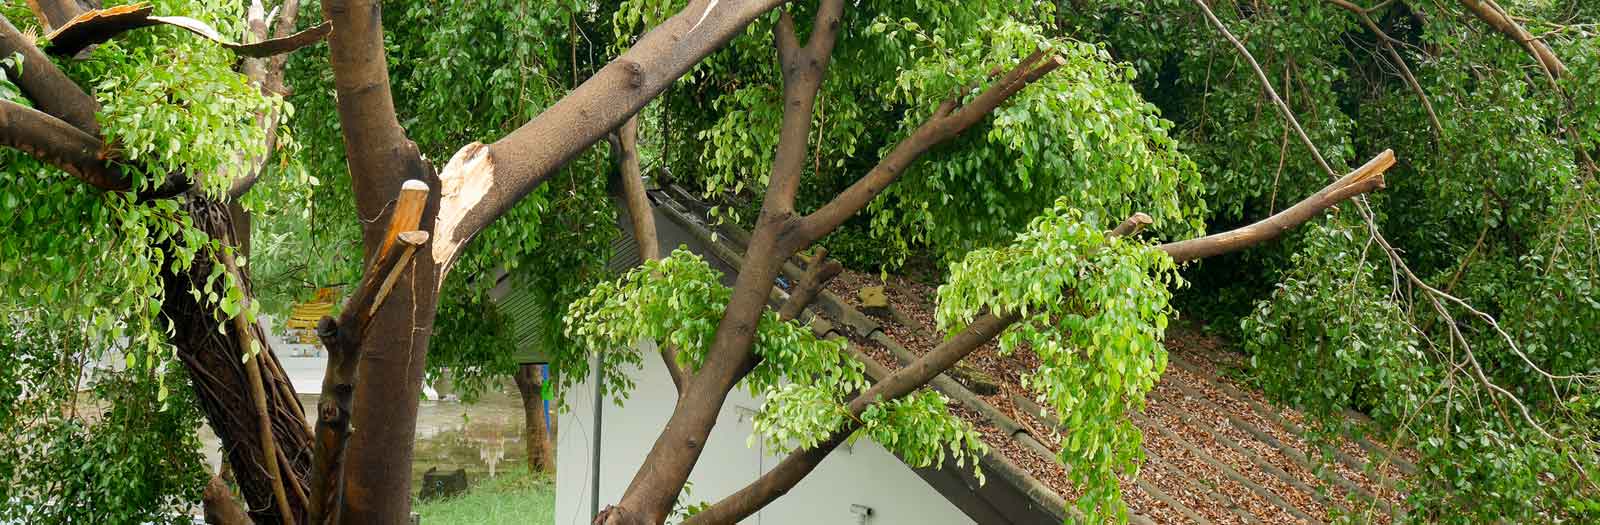 tree damaged by strorm